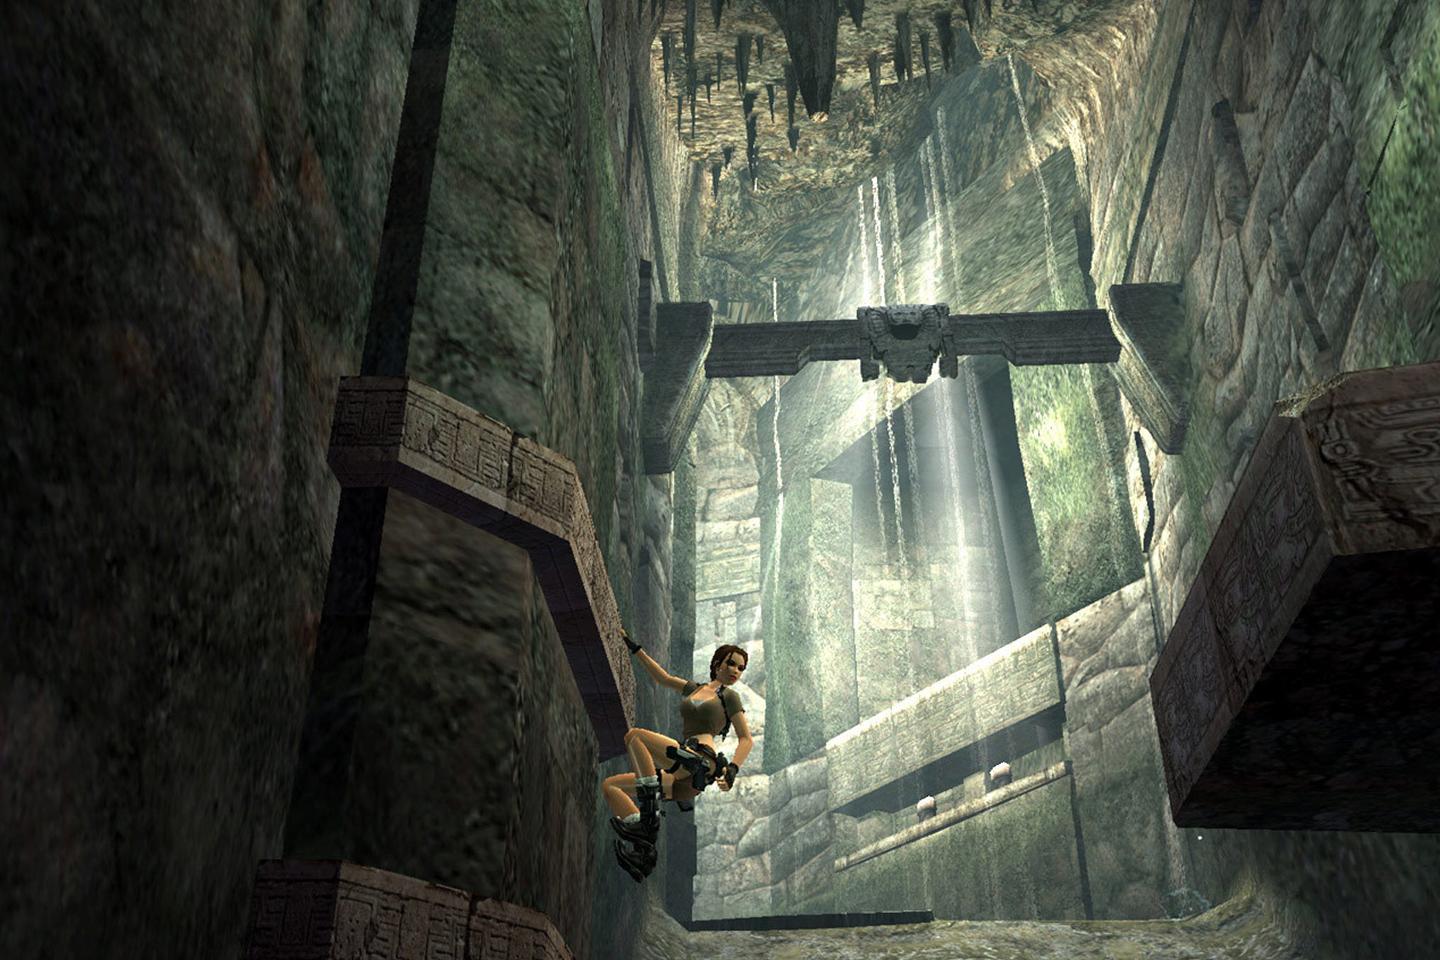 Lara climbing tomb wall looking behind her.